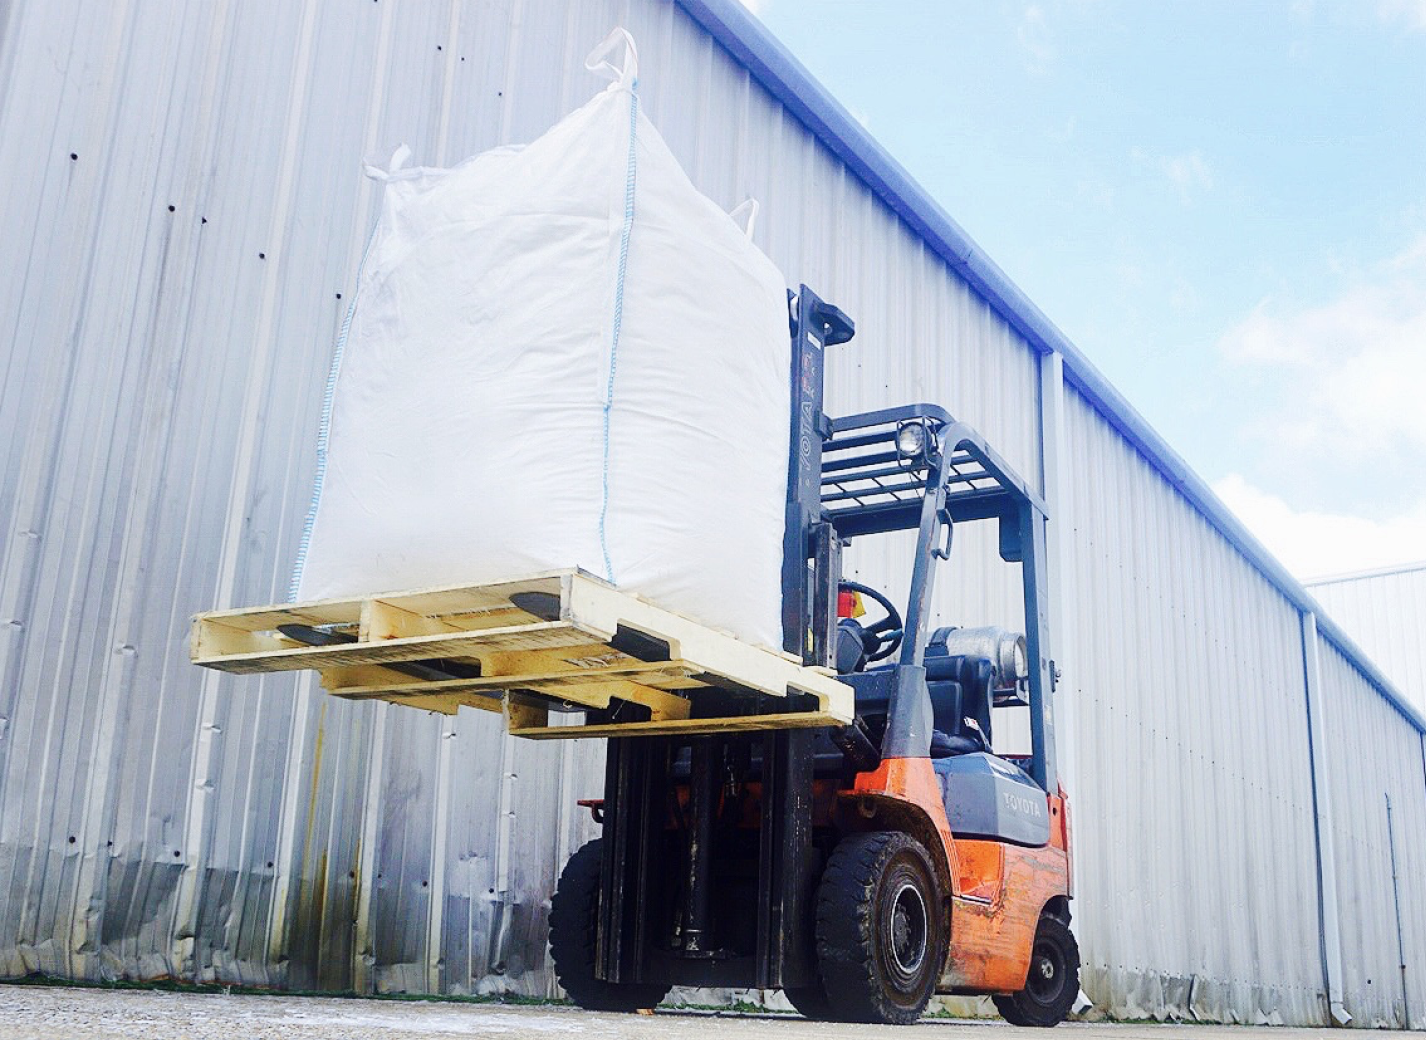  Lifting Bulk Bags by Forklift, Crane or Hoist